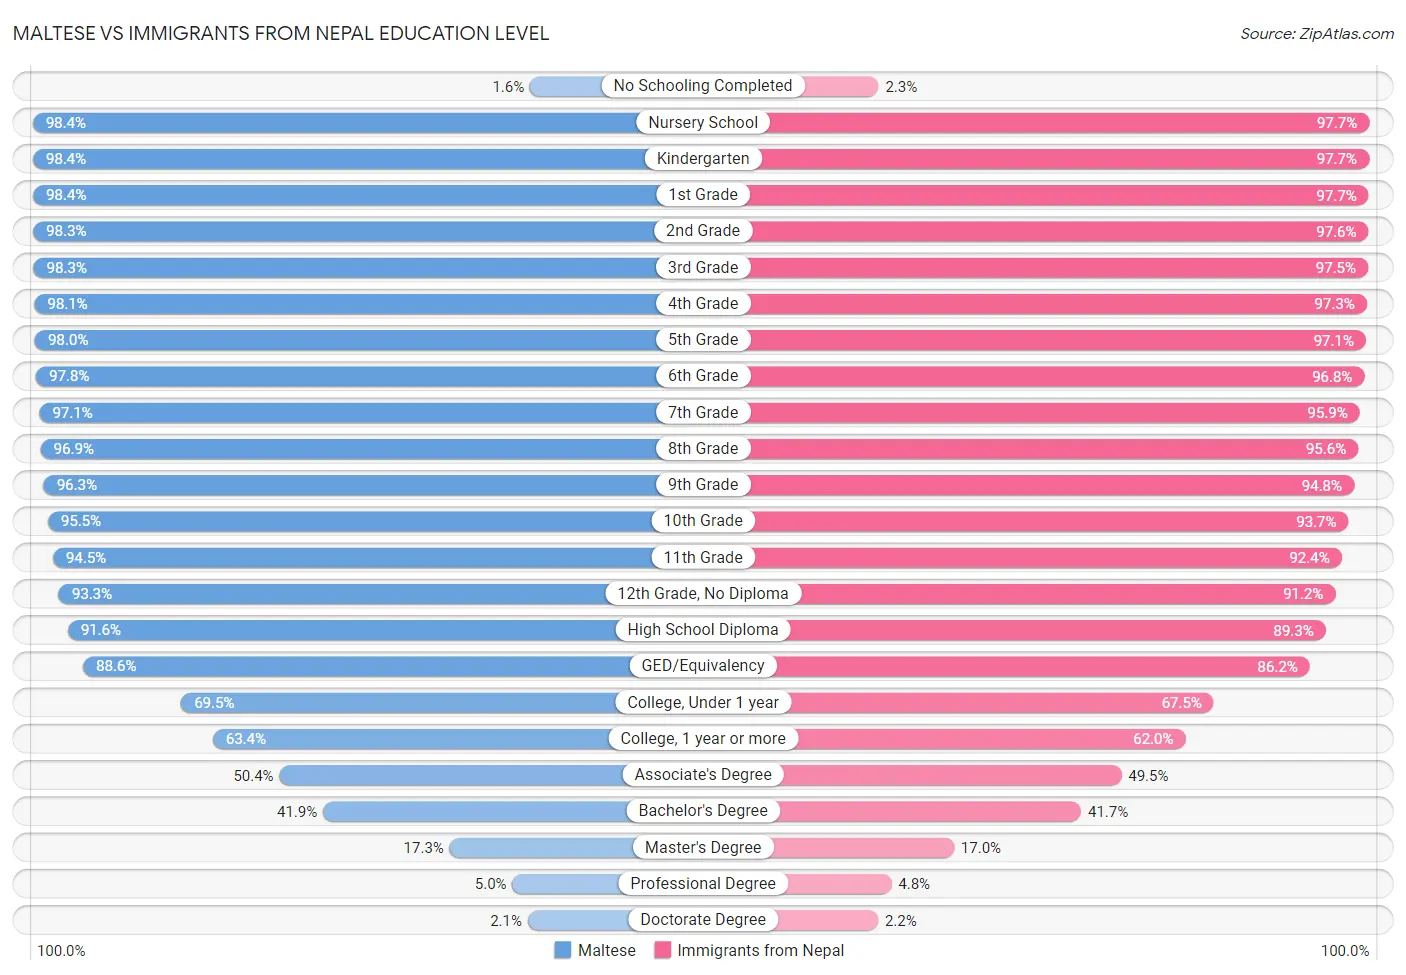 Maltese vs Immigrants from Nepal Education Level